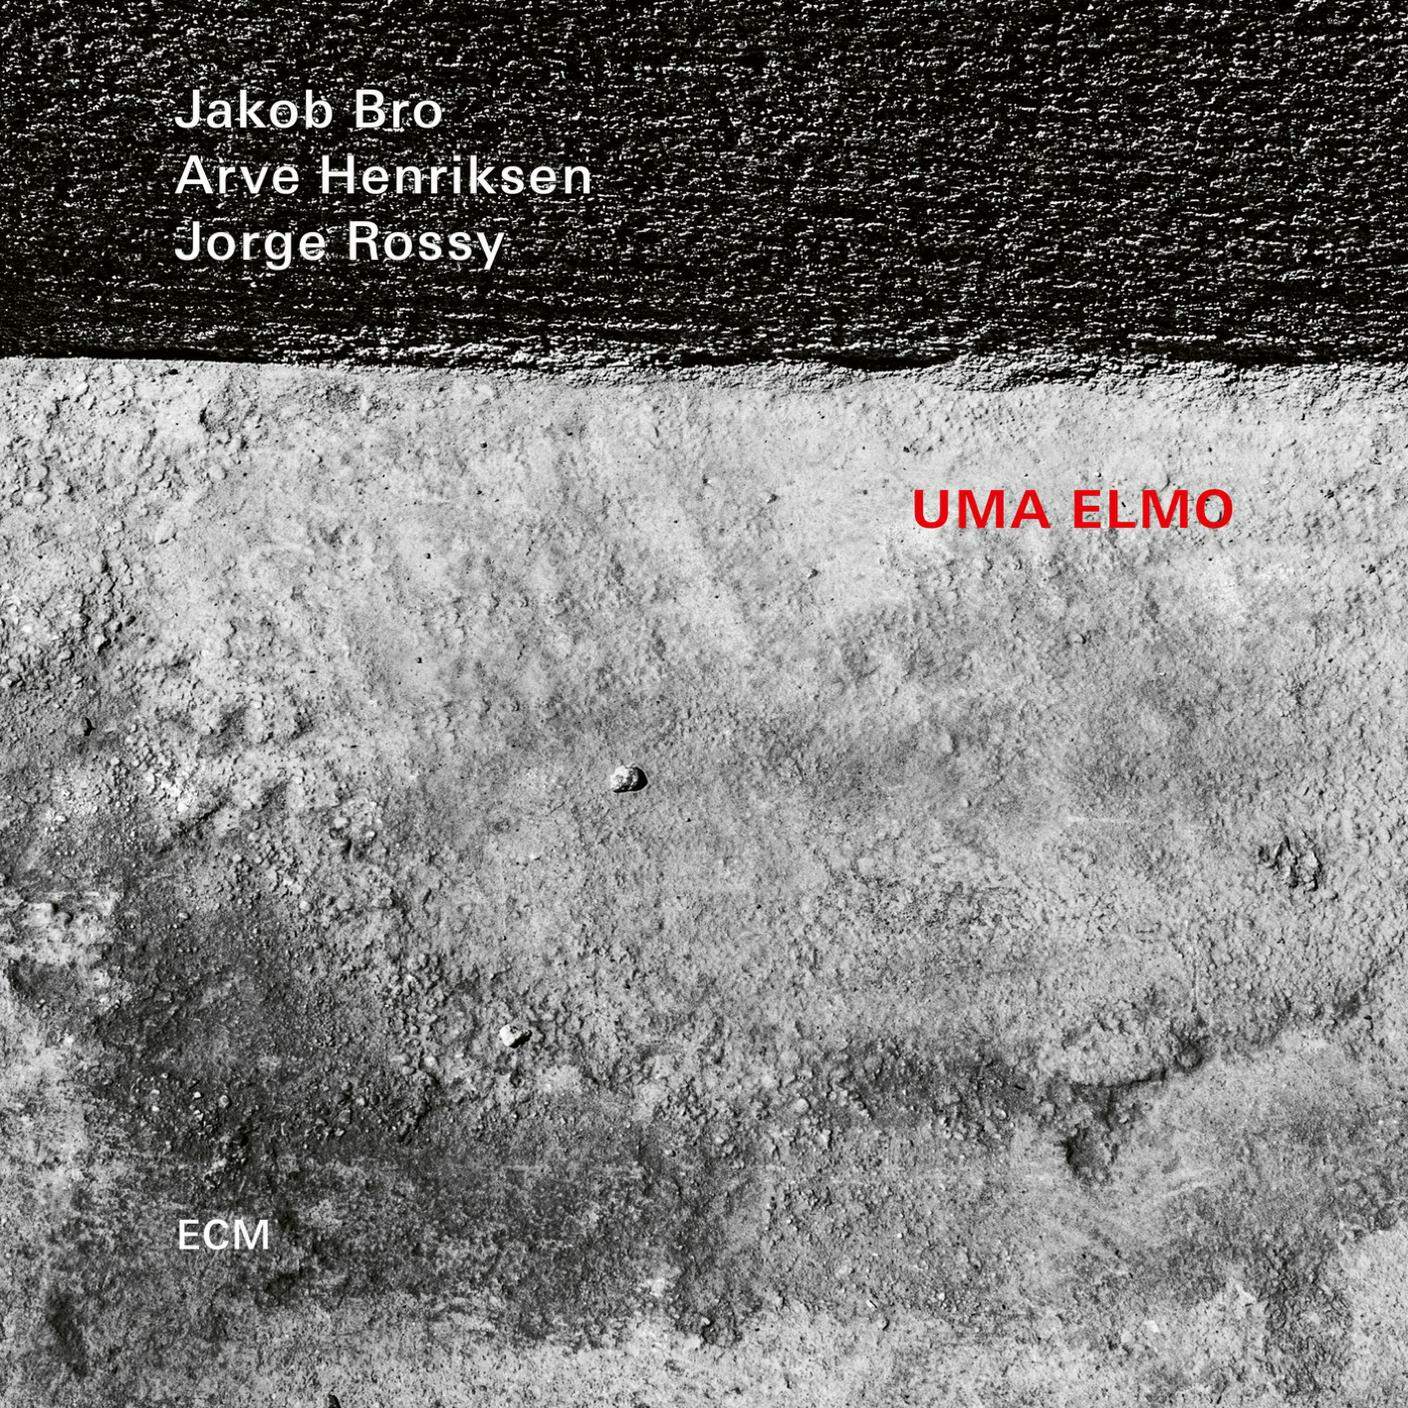 Jakob Bro, Arve Henriksen, Jorge Rossy “Uma Elmo” (Ed. ECM/RSI, 2021)